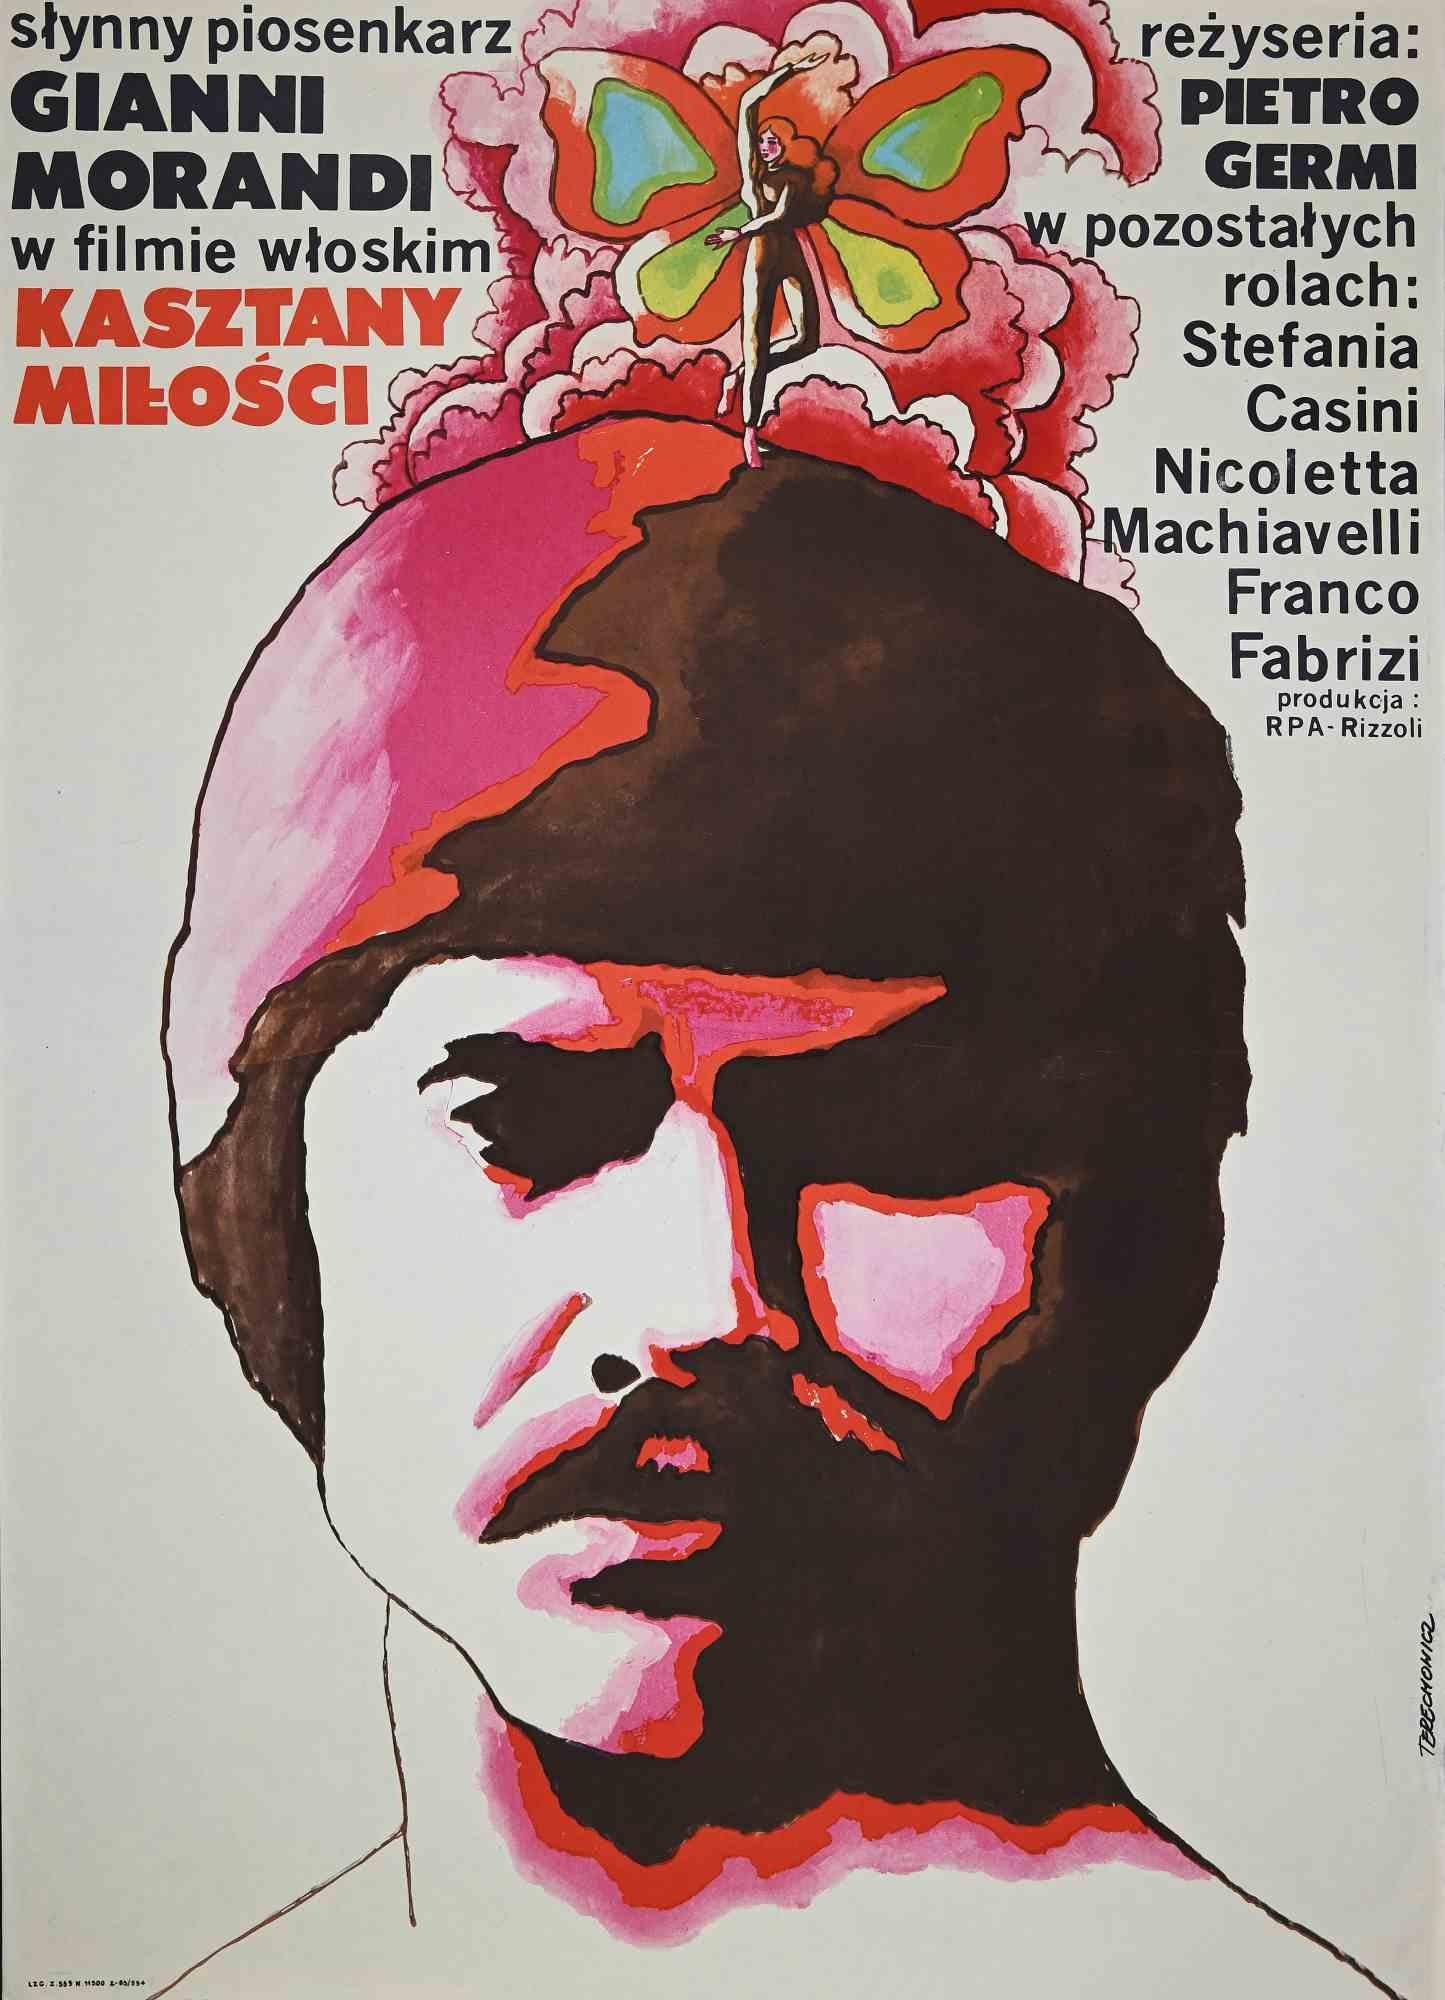 Unknown Figurative Print - Slynny Piosenkarz - Vintage Poster - 1970